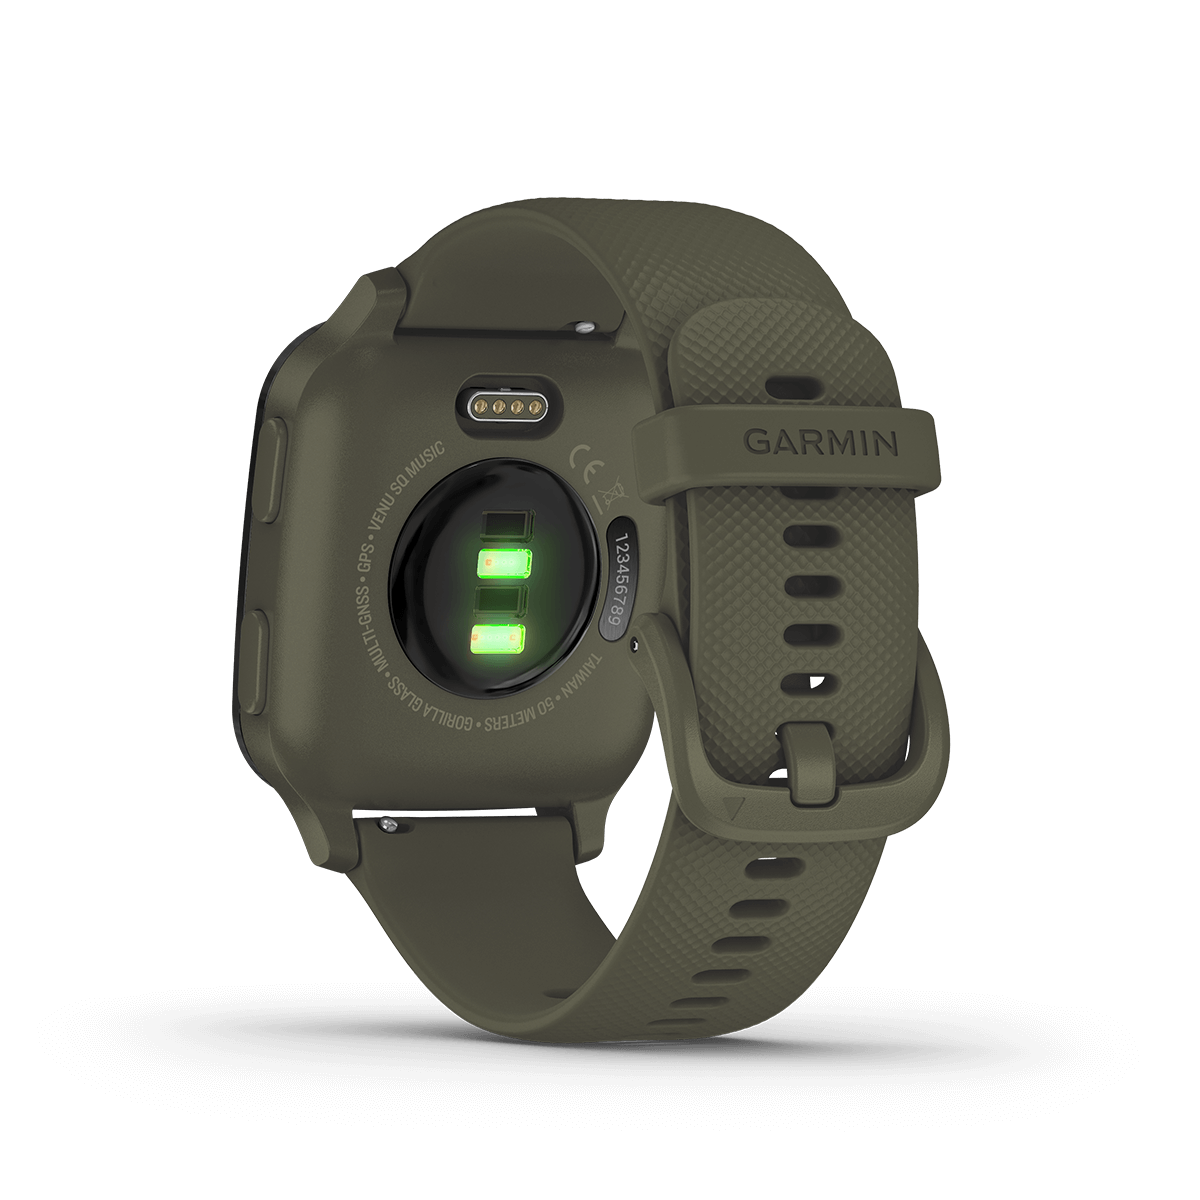 Venu® Music Sq GPS Smartwatch (Slate)